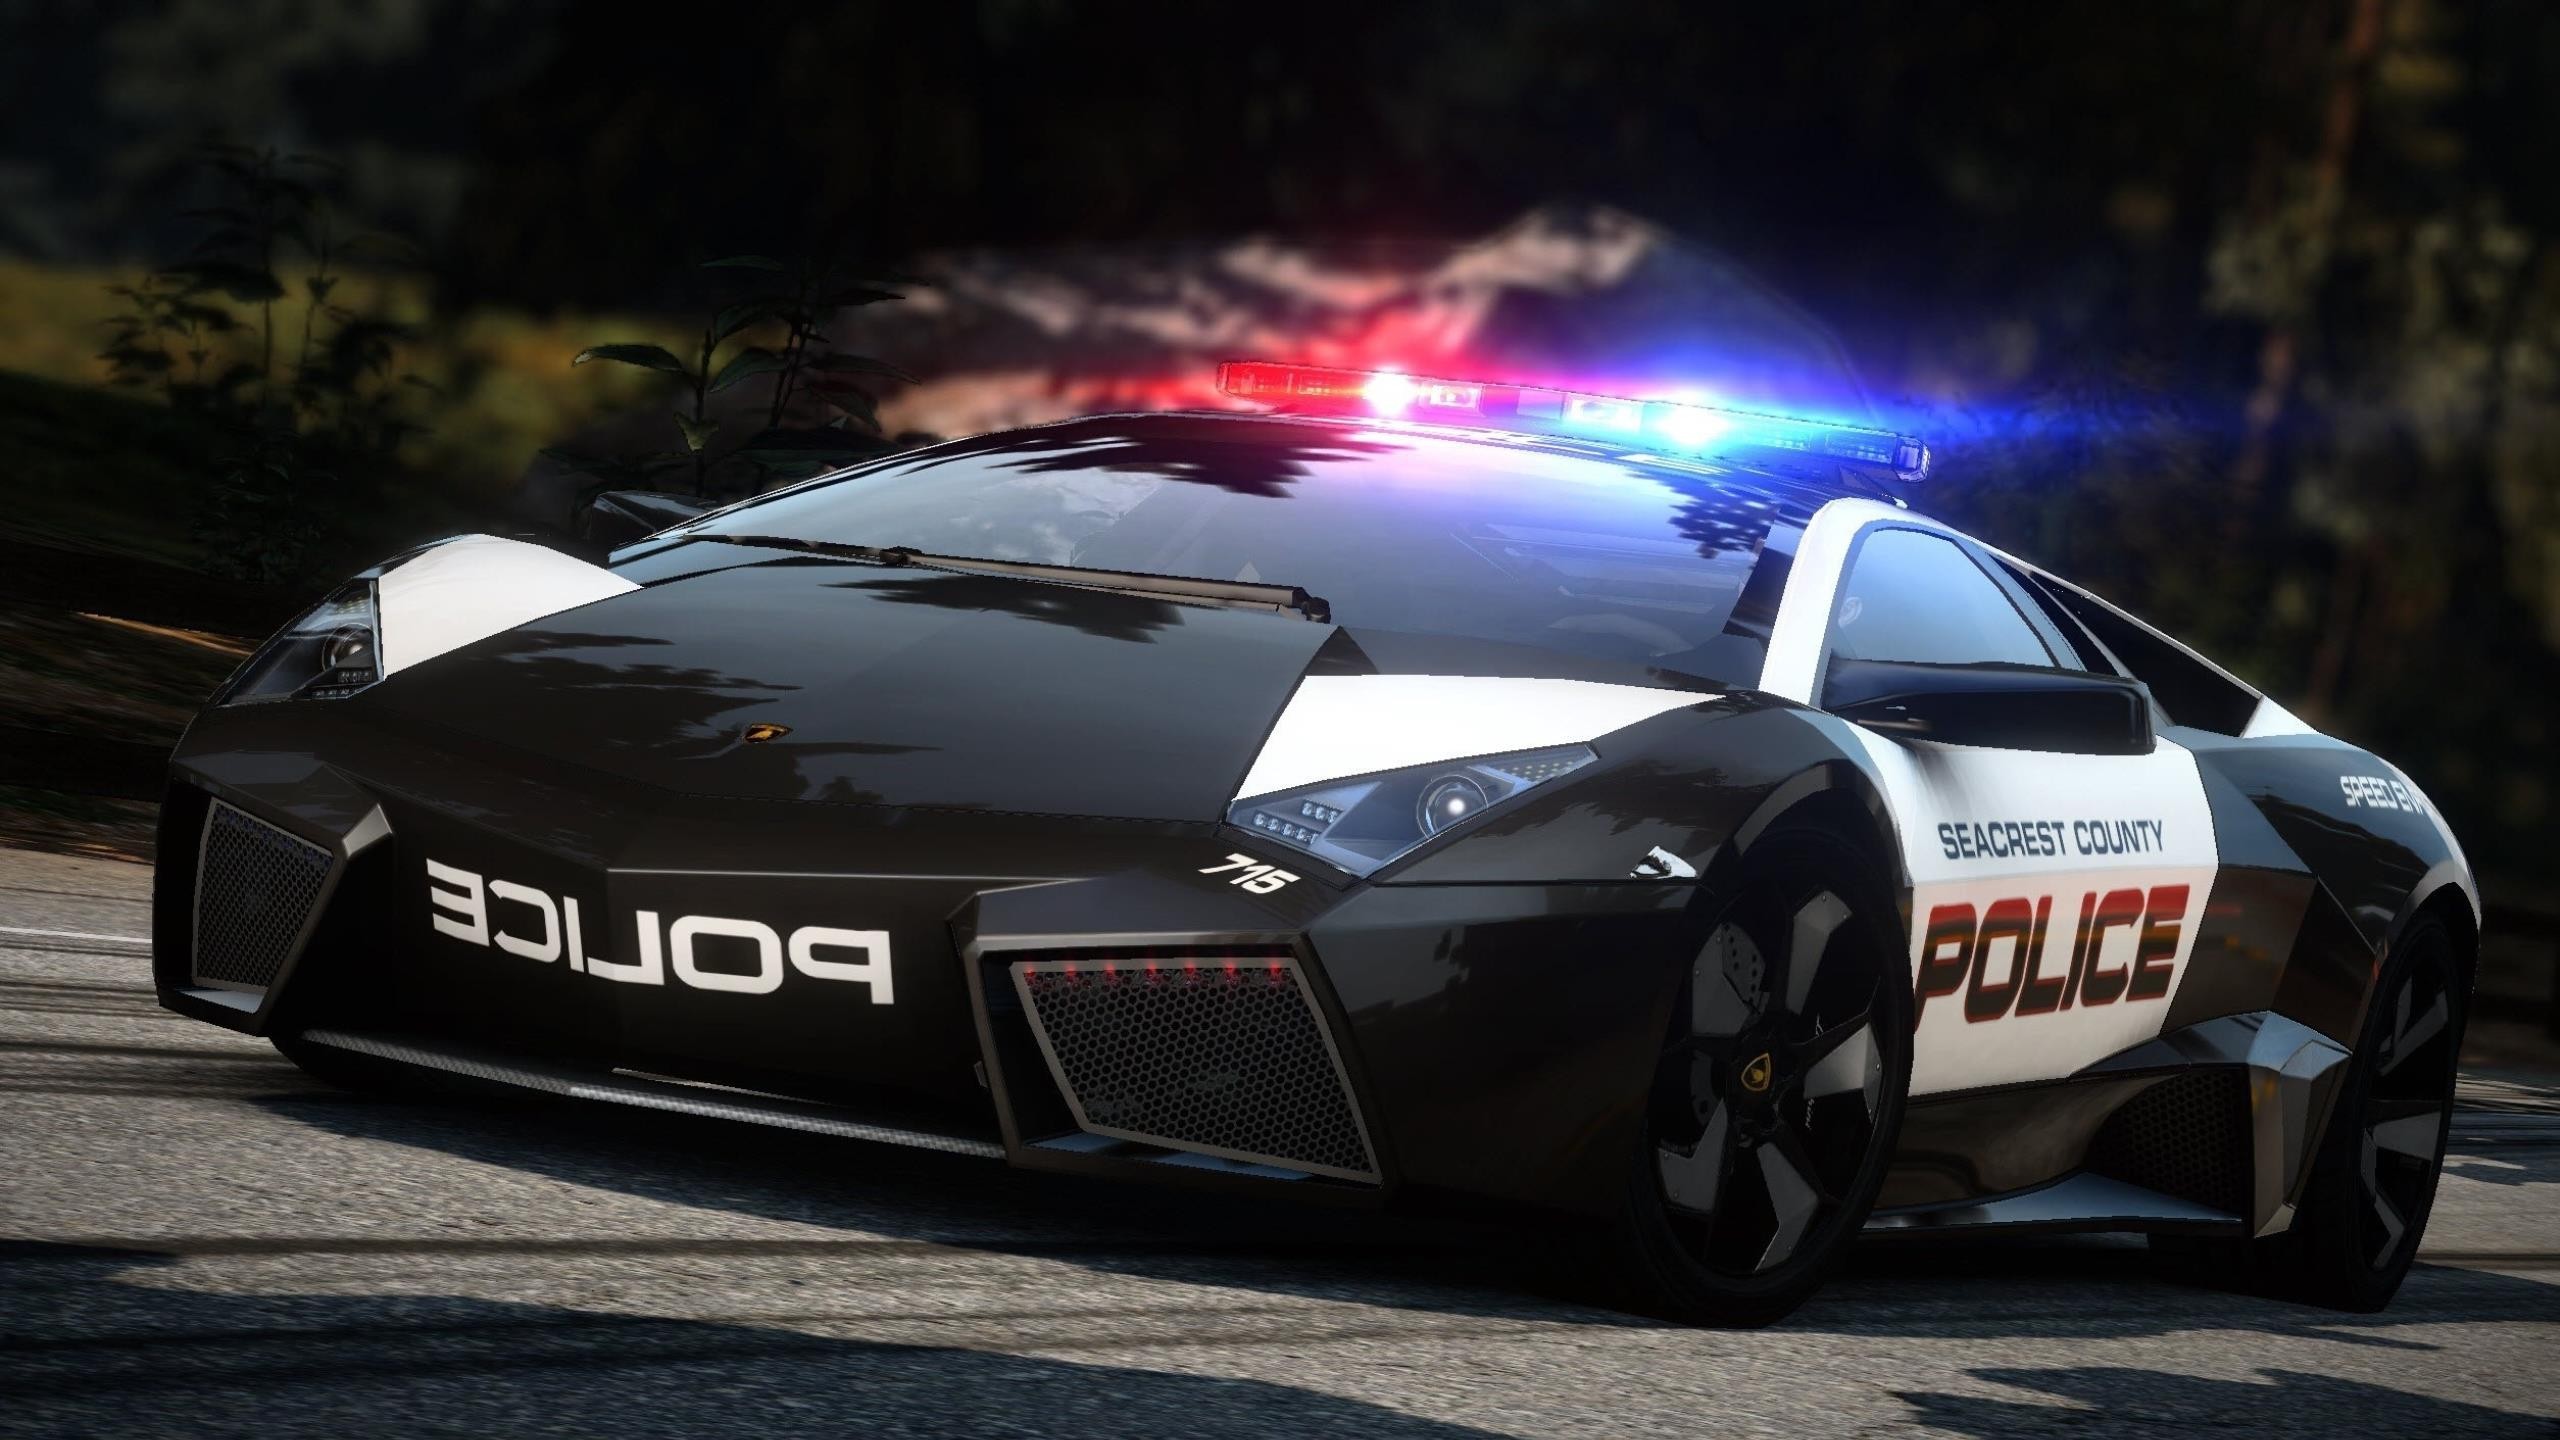 2560x1440 Lamborghini: Lamborghini Patrol Police Car Desktop Backgrounds for .